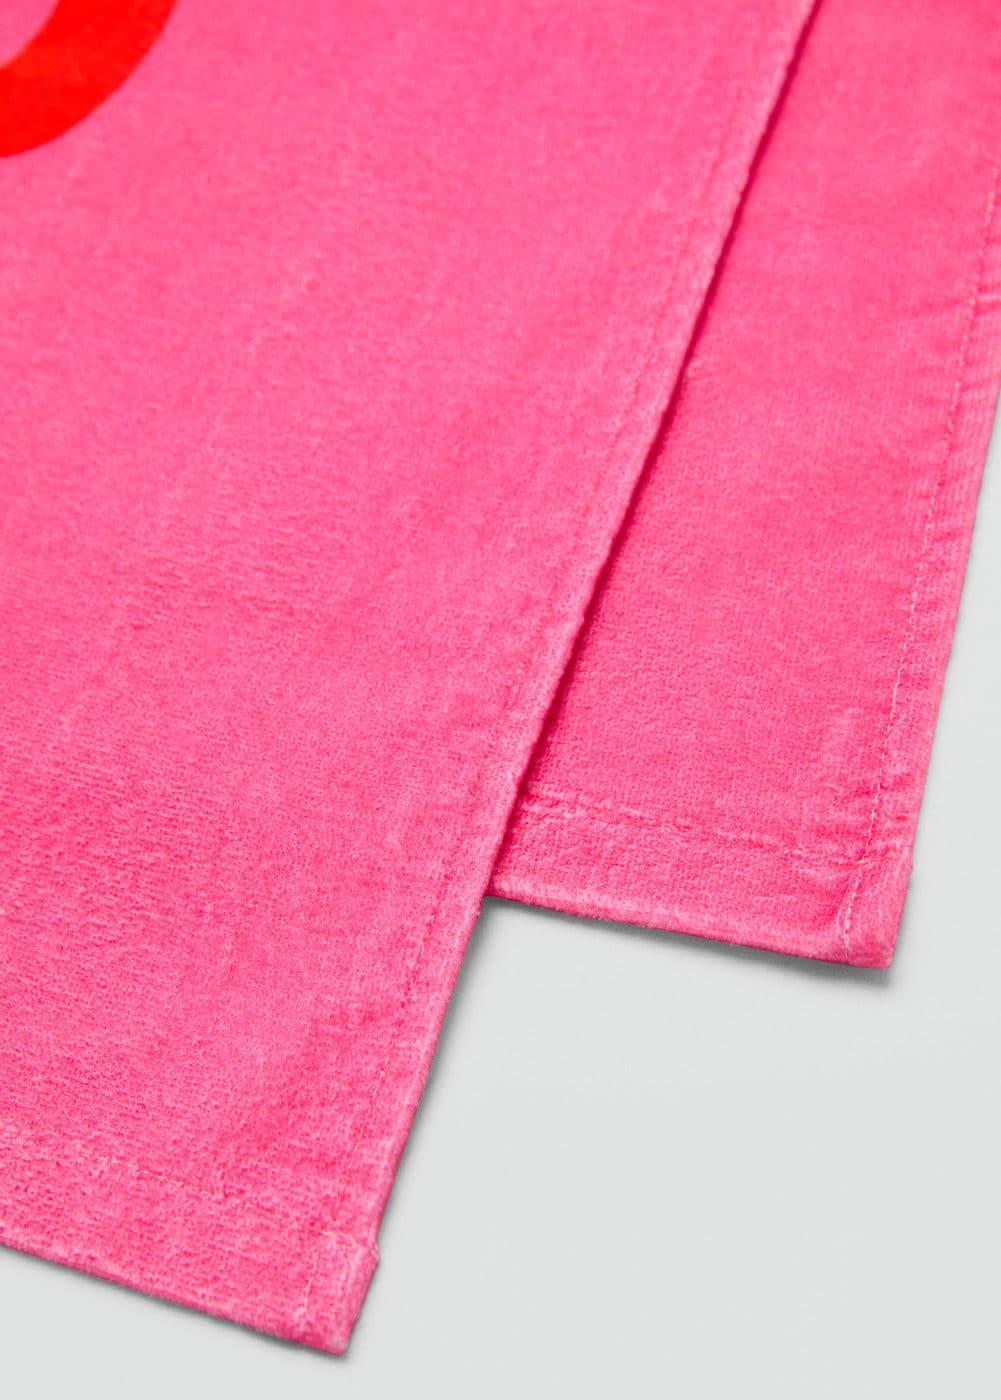 MANGO - 100% cotton floral towel - One size - Women Product Image